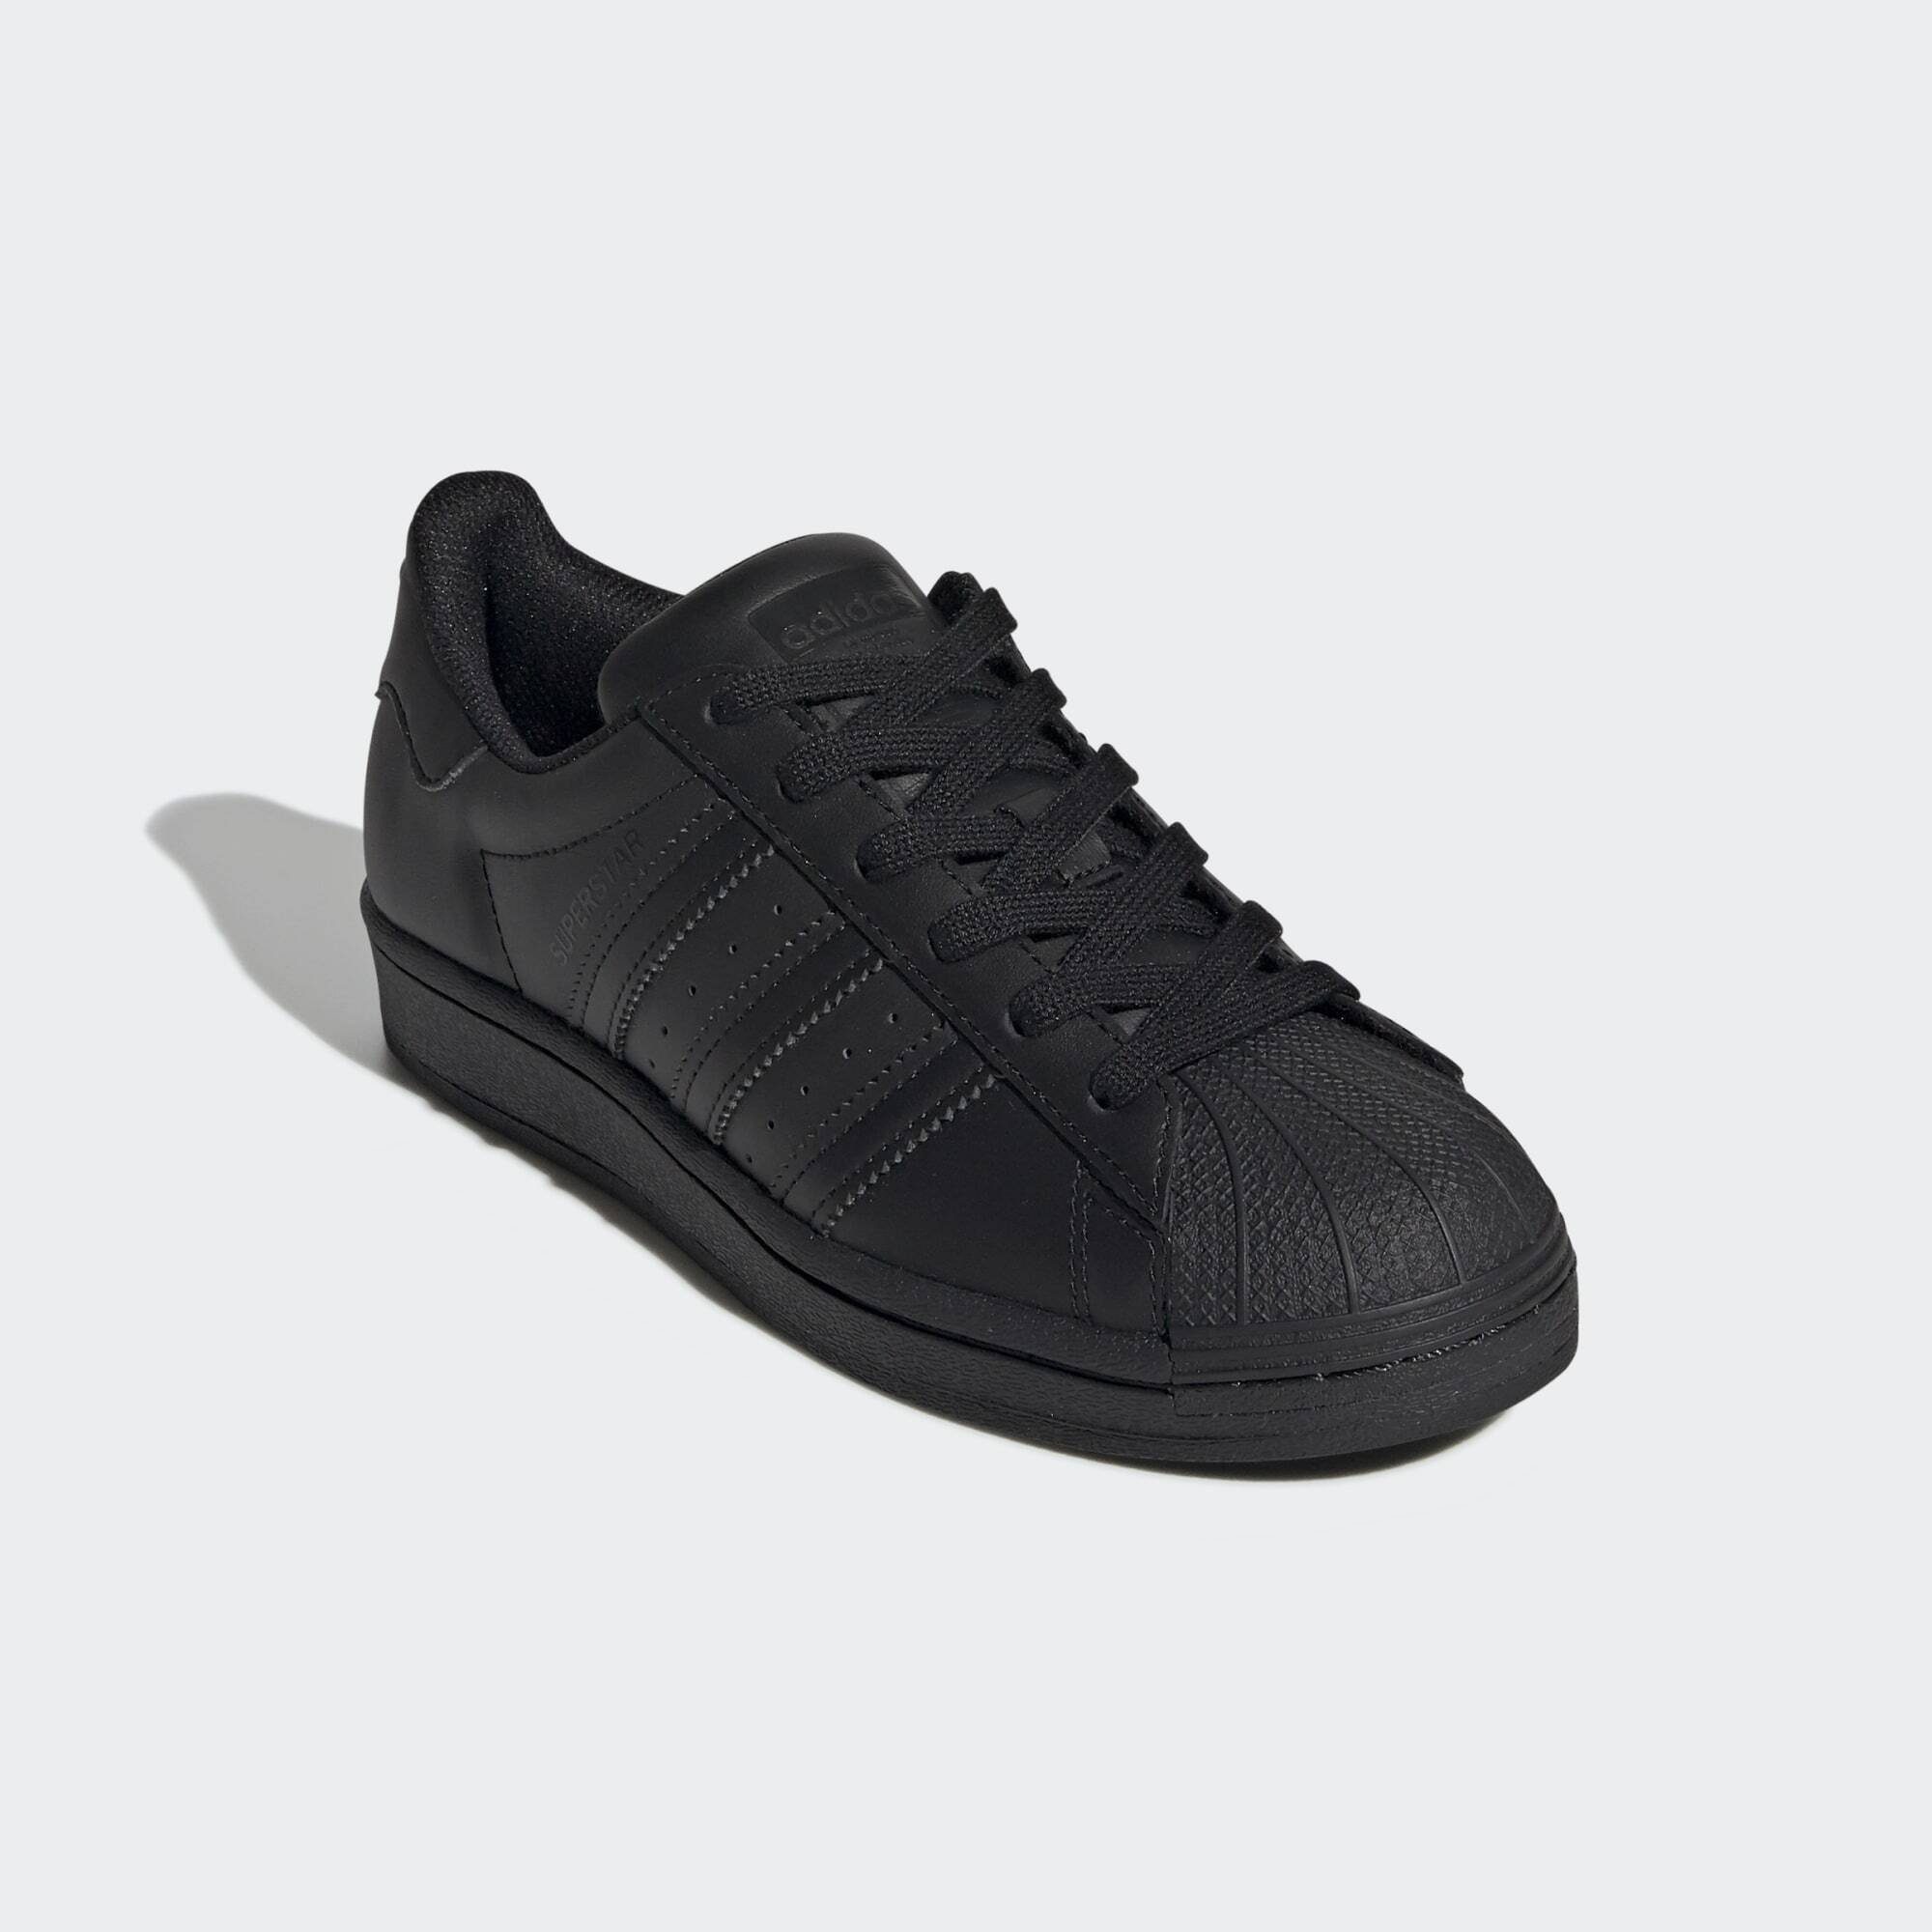 SCHUH adidas Black Black SUPERSTAR Black Sneaker Core Core Core Originals / /